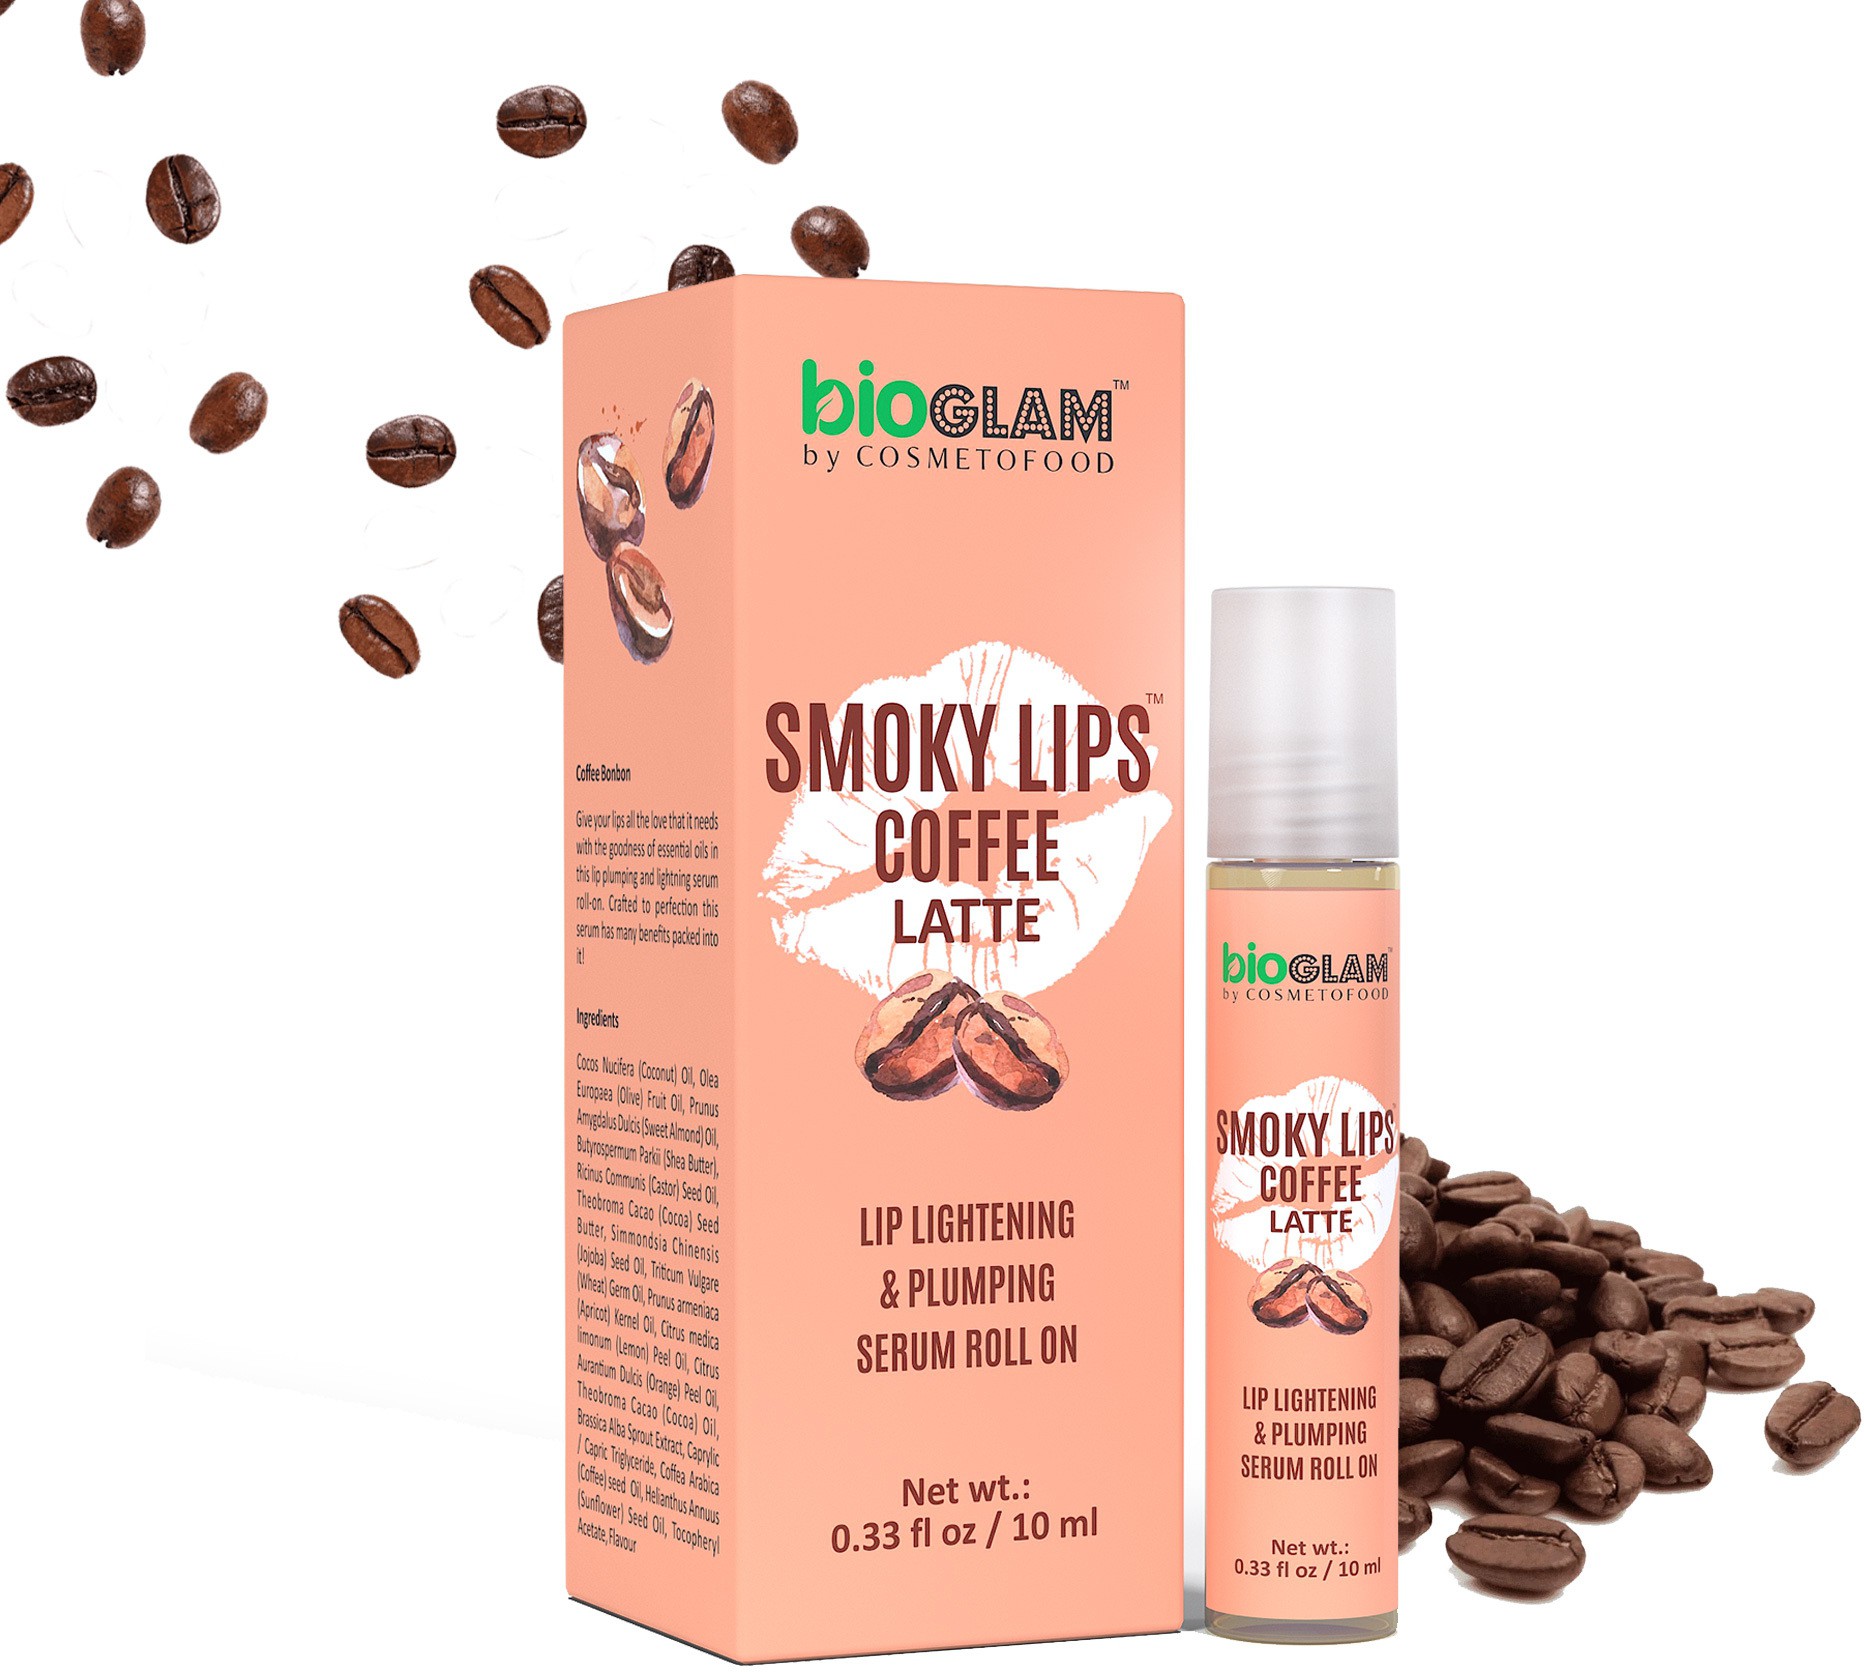 Cosmetofood Bioglam Smoky Lips Coffee latte Lip Lightening & Plumping Serum Roll-On For Soft & Plump Lips